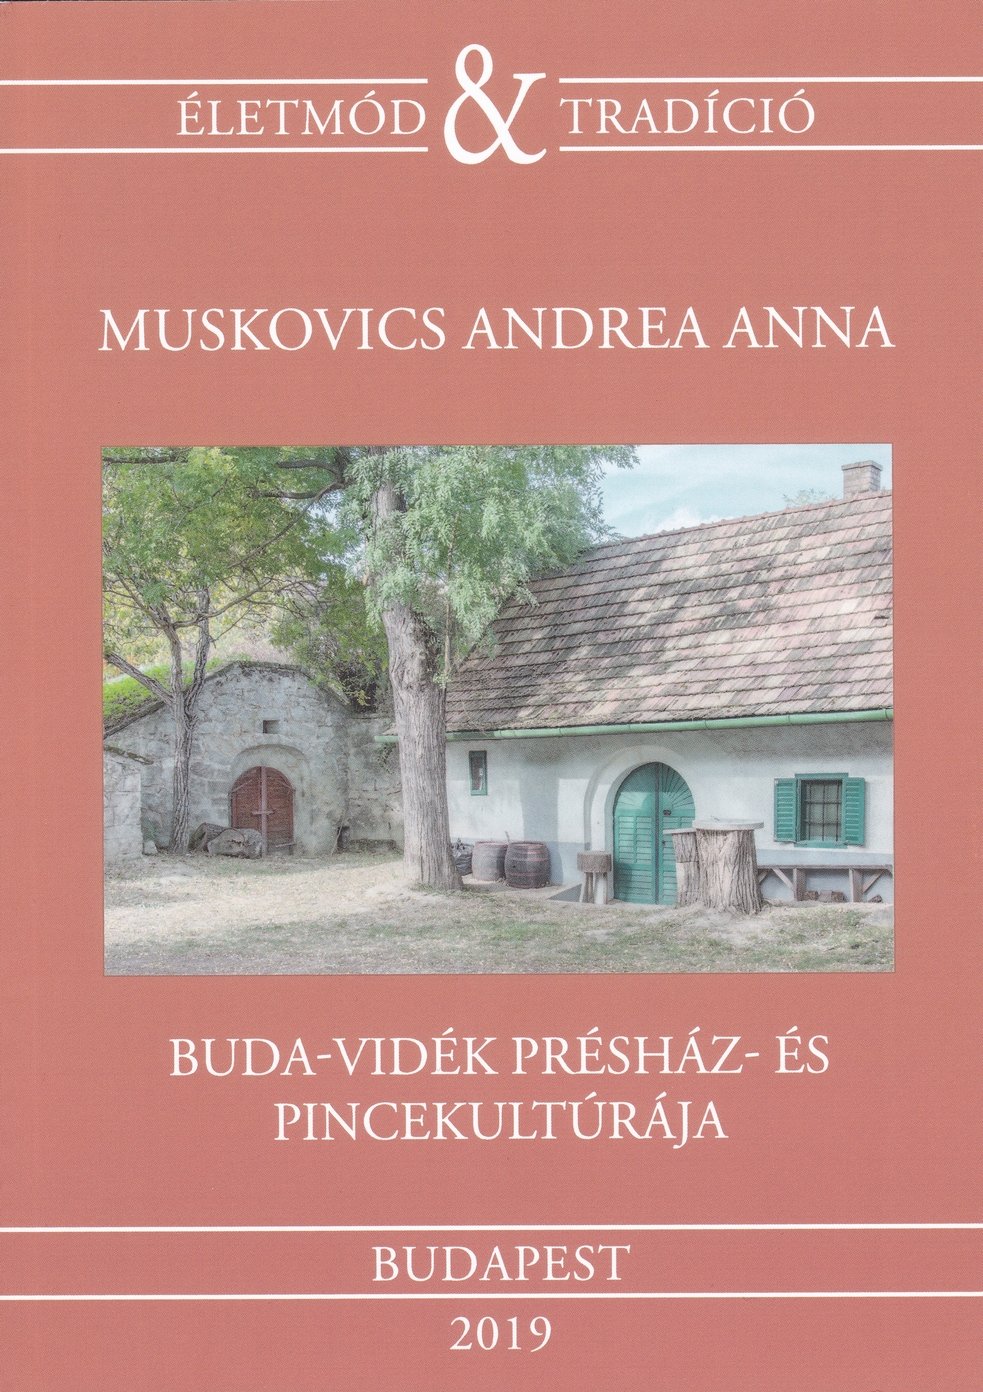 Muskovics Andrea Anna: Buda-vidék présház- és pincekultúrája (Rippl-Rónai Múzeum CC BY-NC-ND)